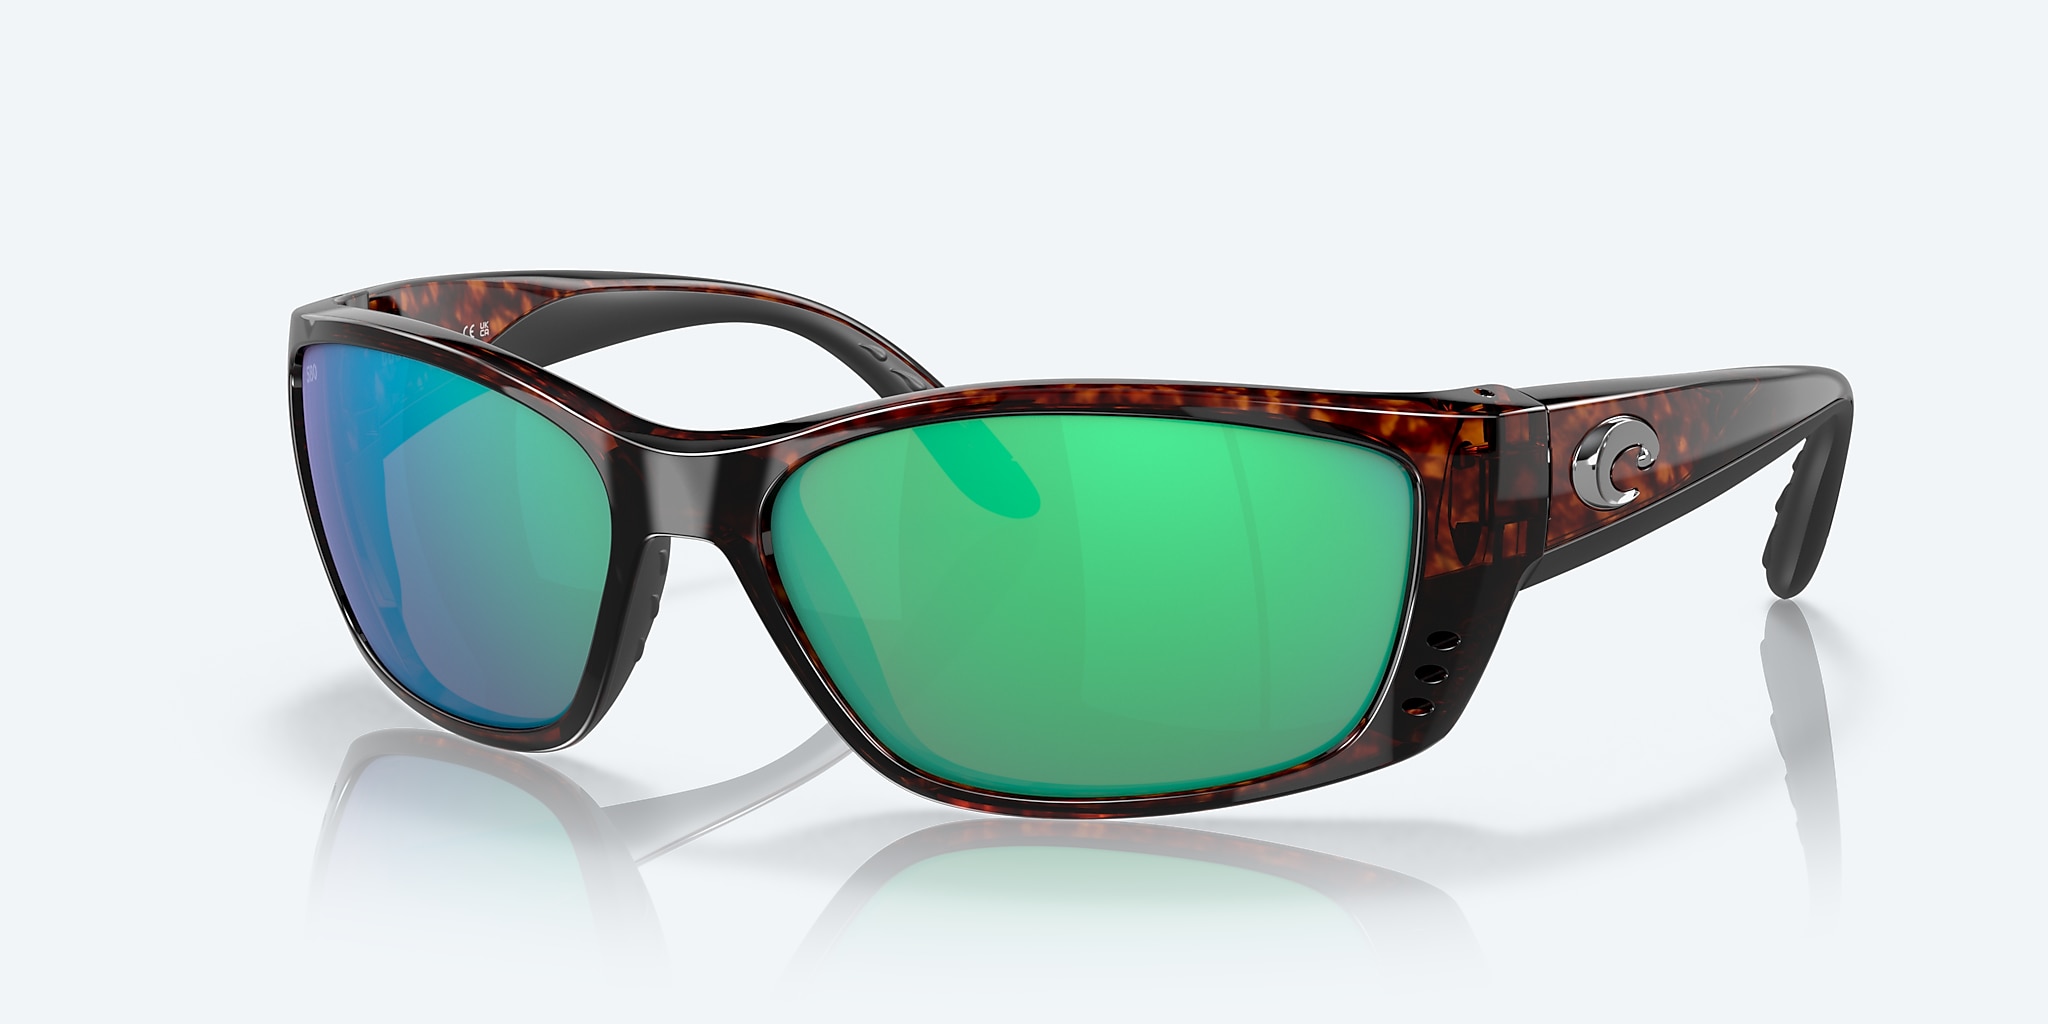 Fisch Polarized Sunglasses in Green Mirror